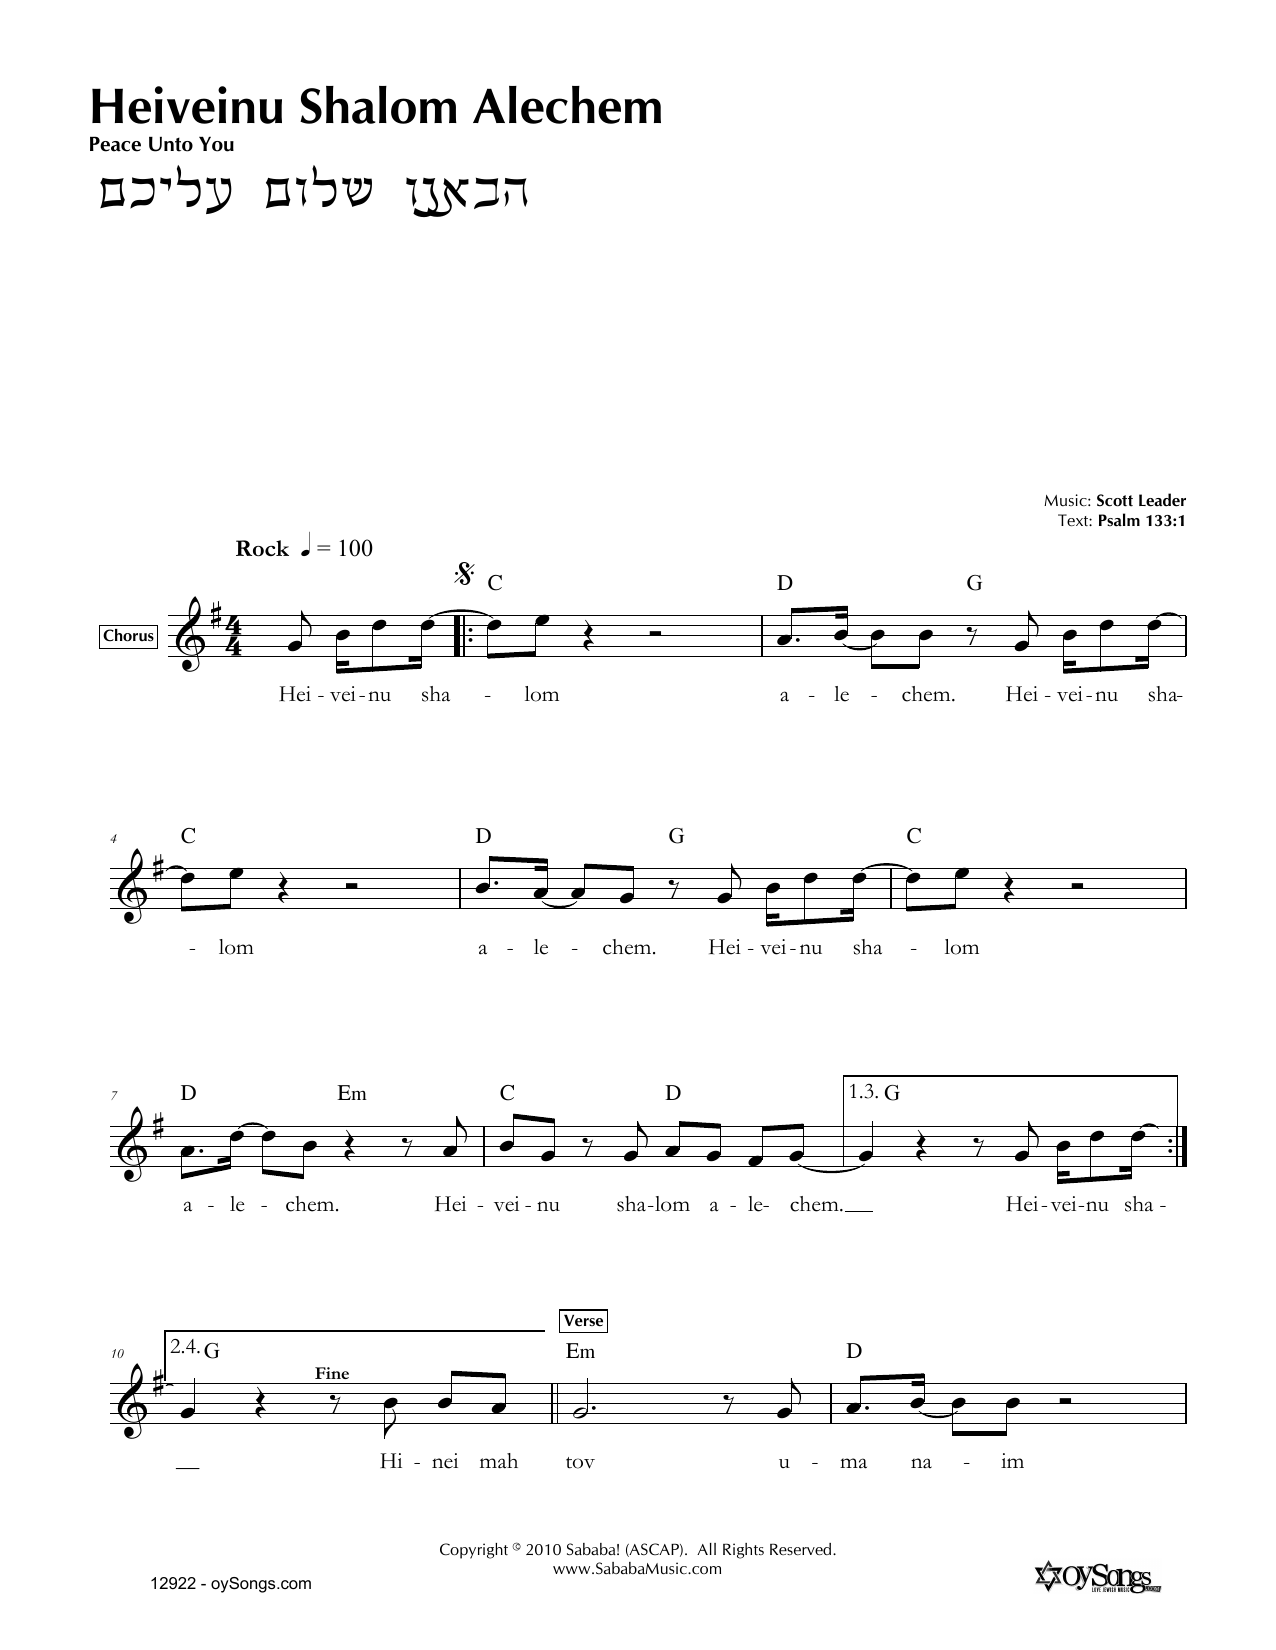 Scott Leader Heiveinu Shalom Alechem Sheet Music Notes & Chords for Melody Line, Lyrics & Chords - Download or Print PDF